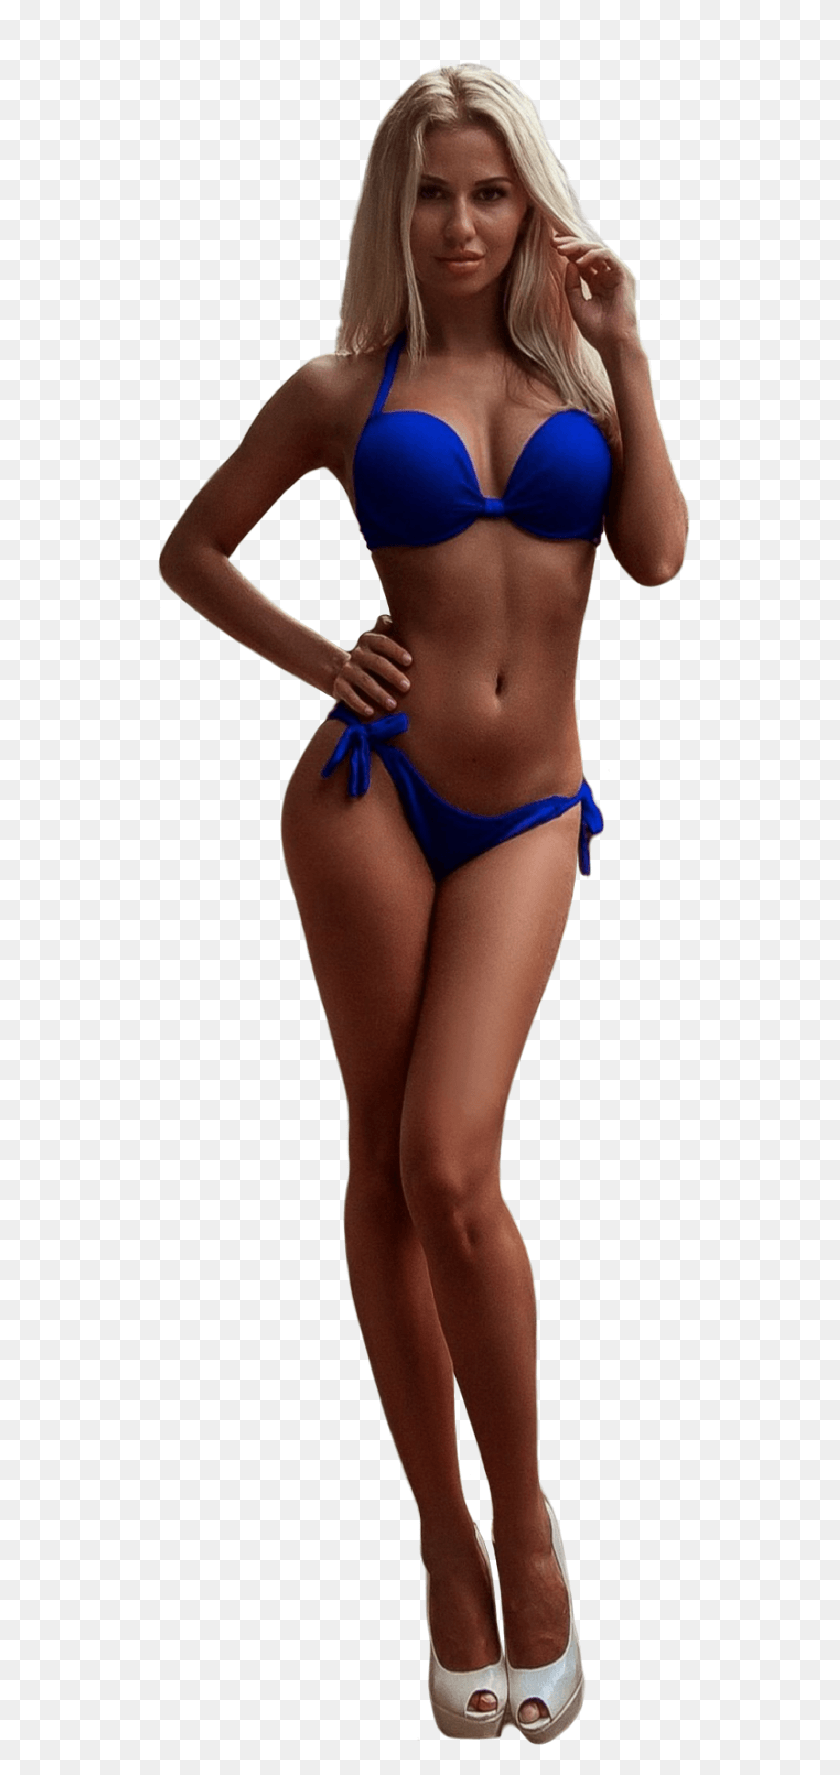 542x1715 Moda Fashionart Traje De Baño Bikini Traje De Baño Modelo Traje De Baño Parte Inferior, Ropa, Vestimenta, Persona Hd Png